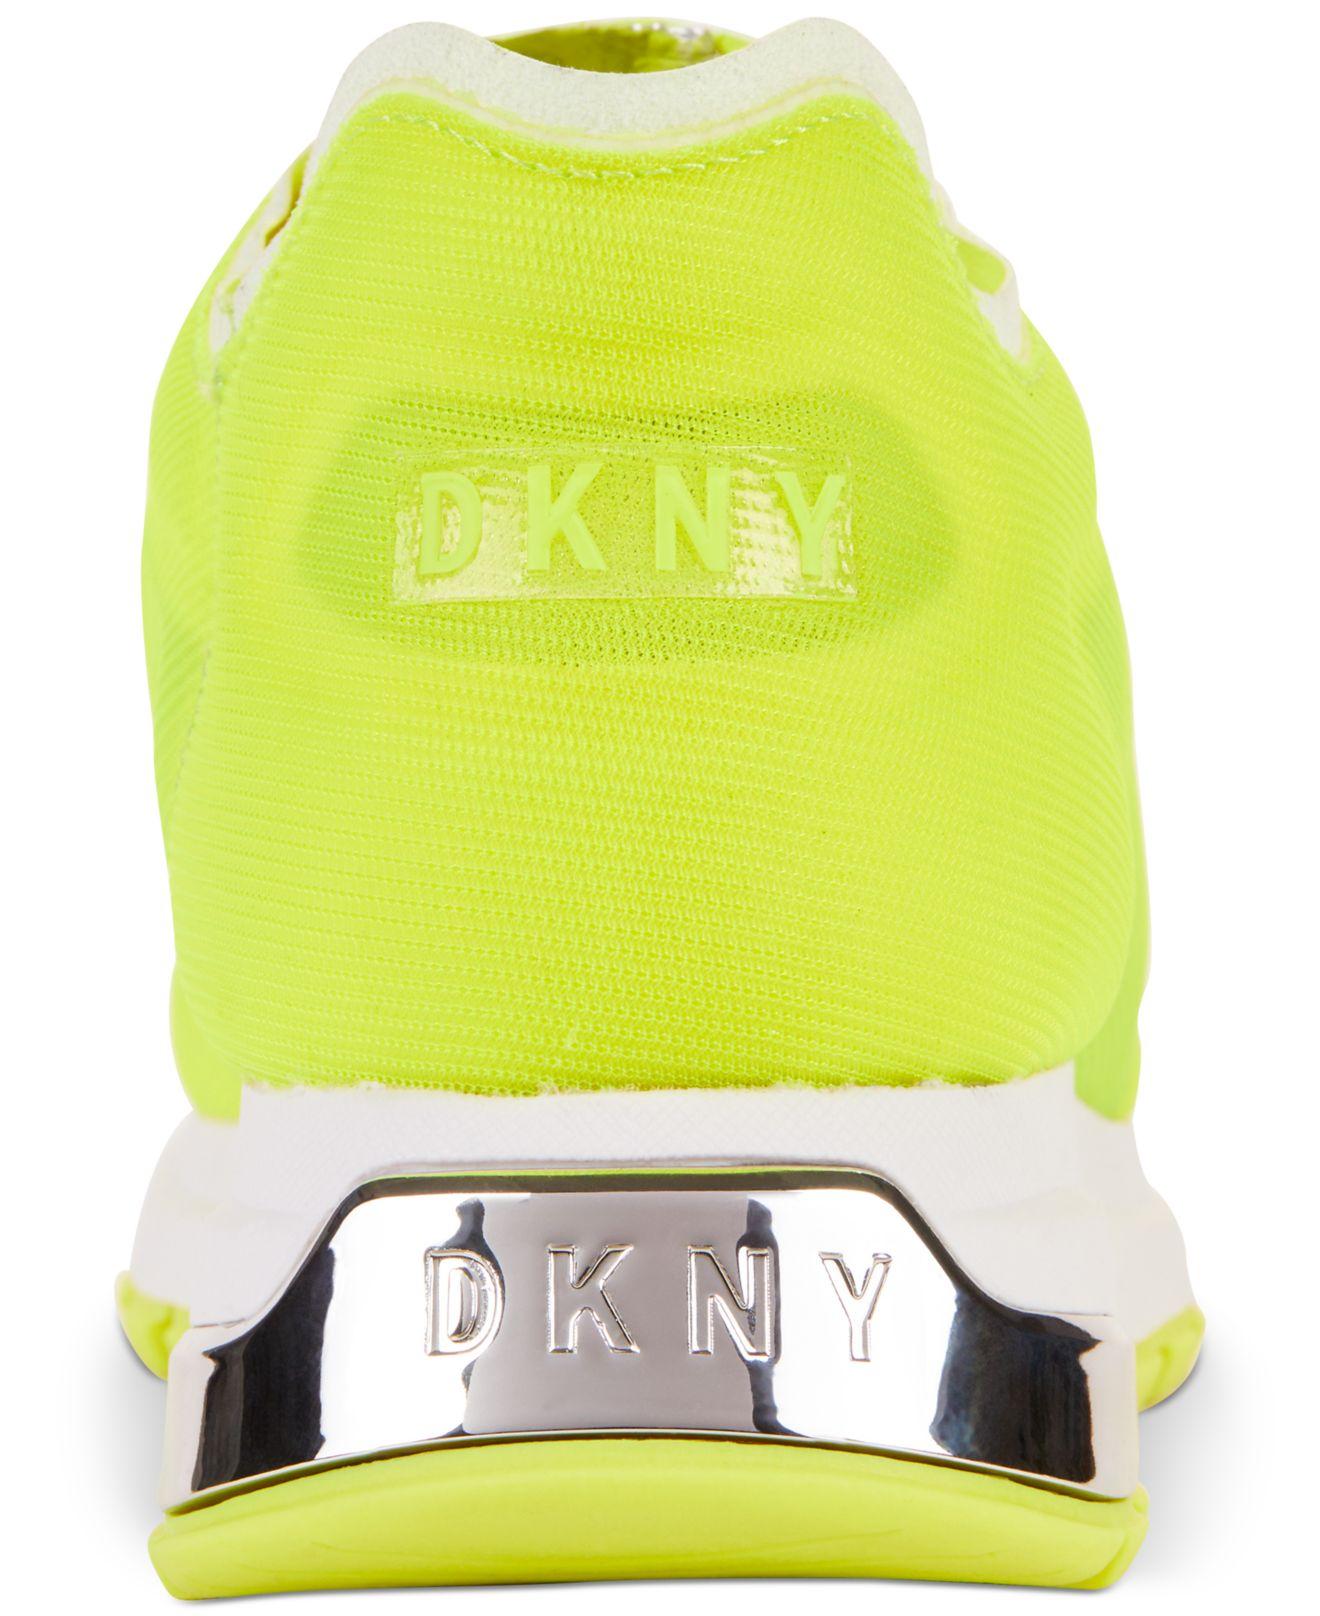 DKNY Mak Lace Up Sneakers in Neon Green (Green) | Lyst